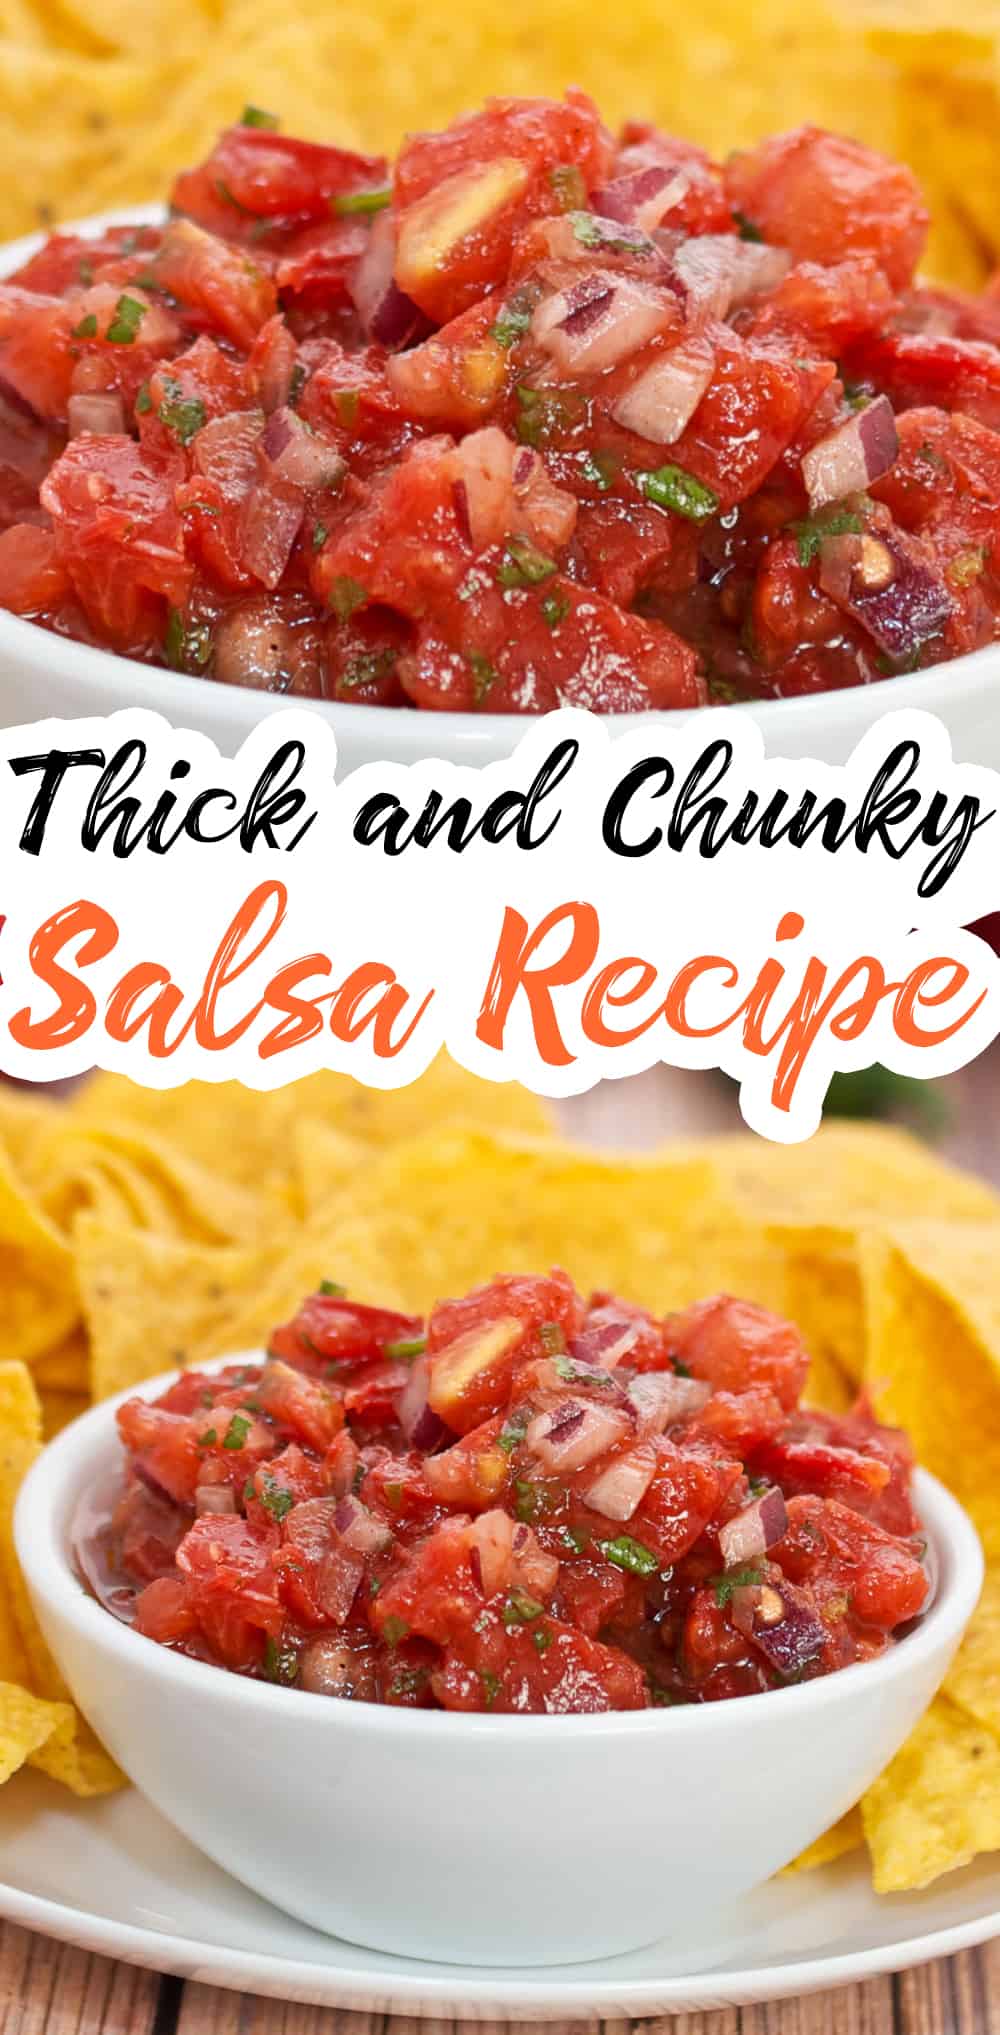 Thick and Chunky Salsa